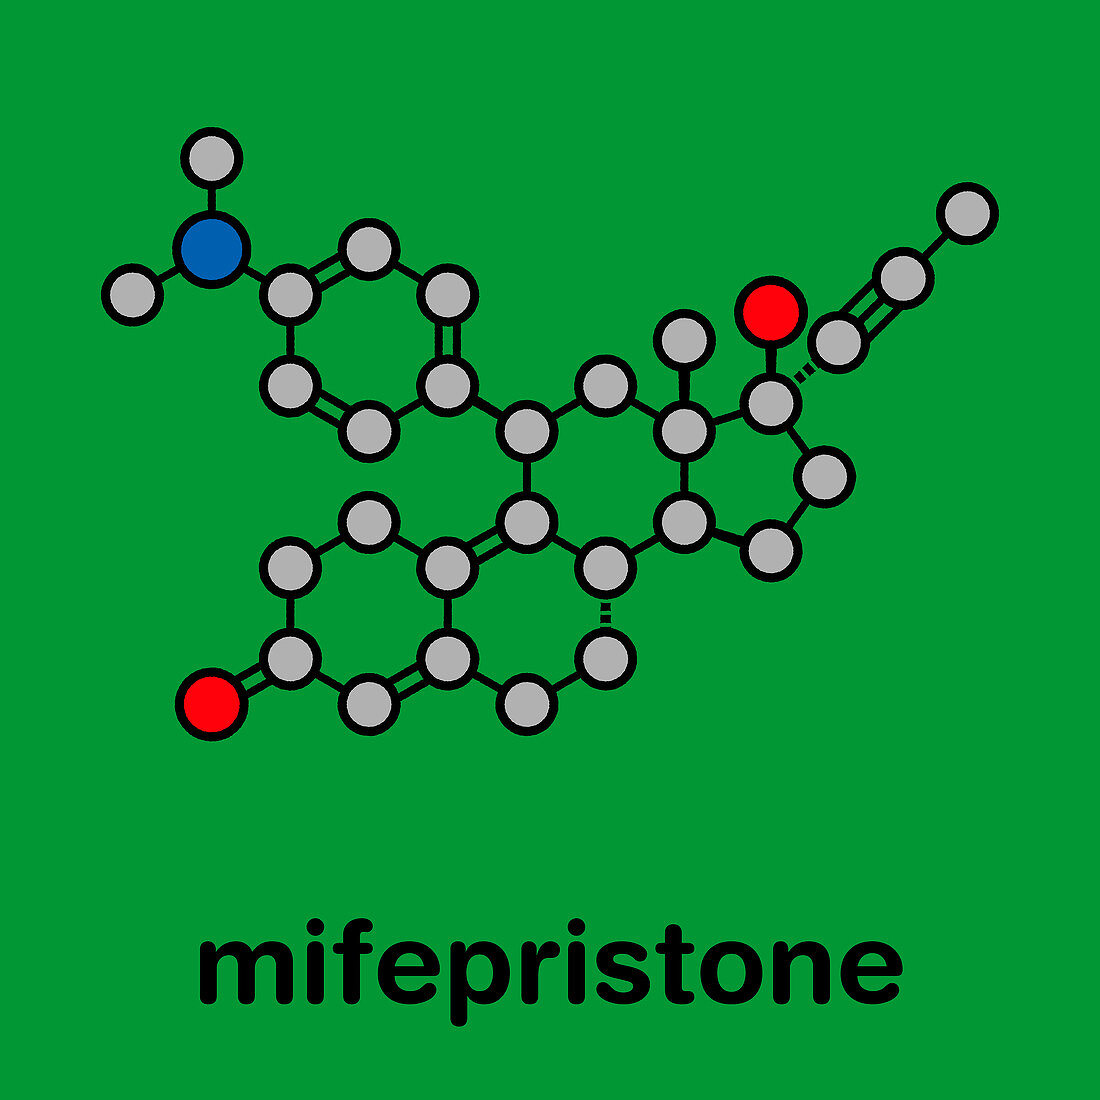 Mifepristone abortion-inducing drug, molecular model